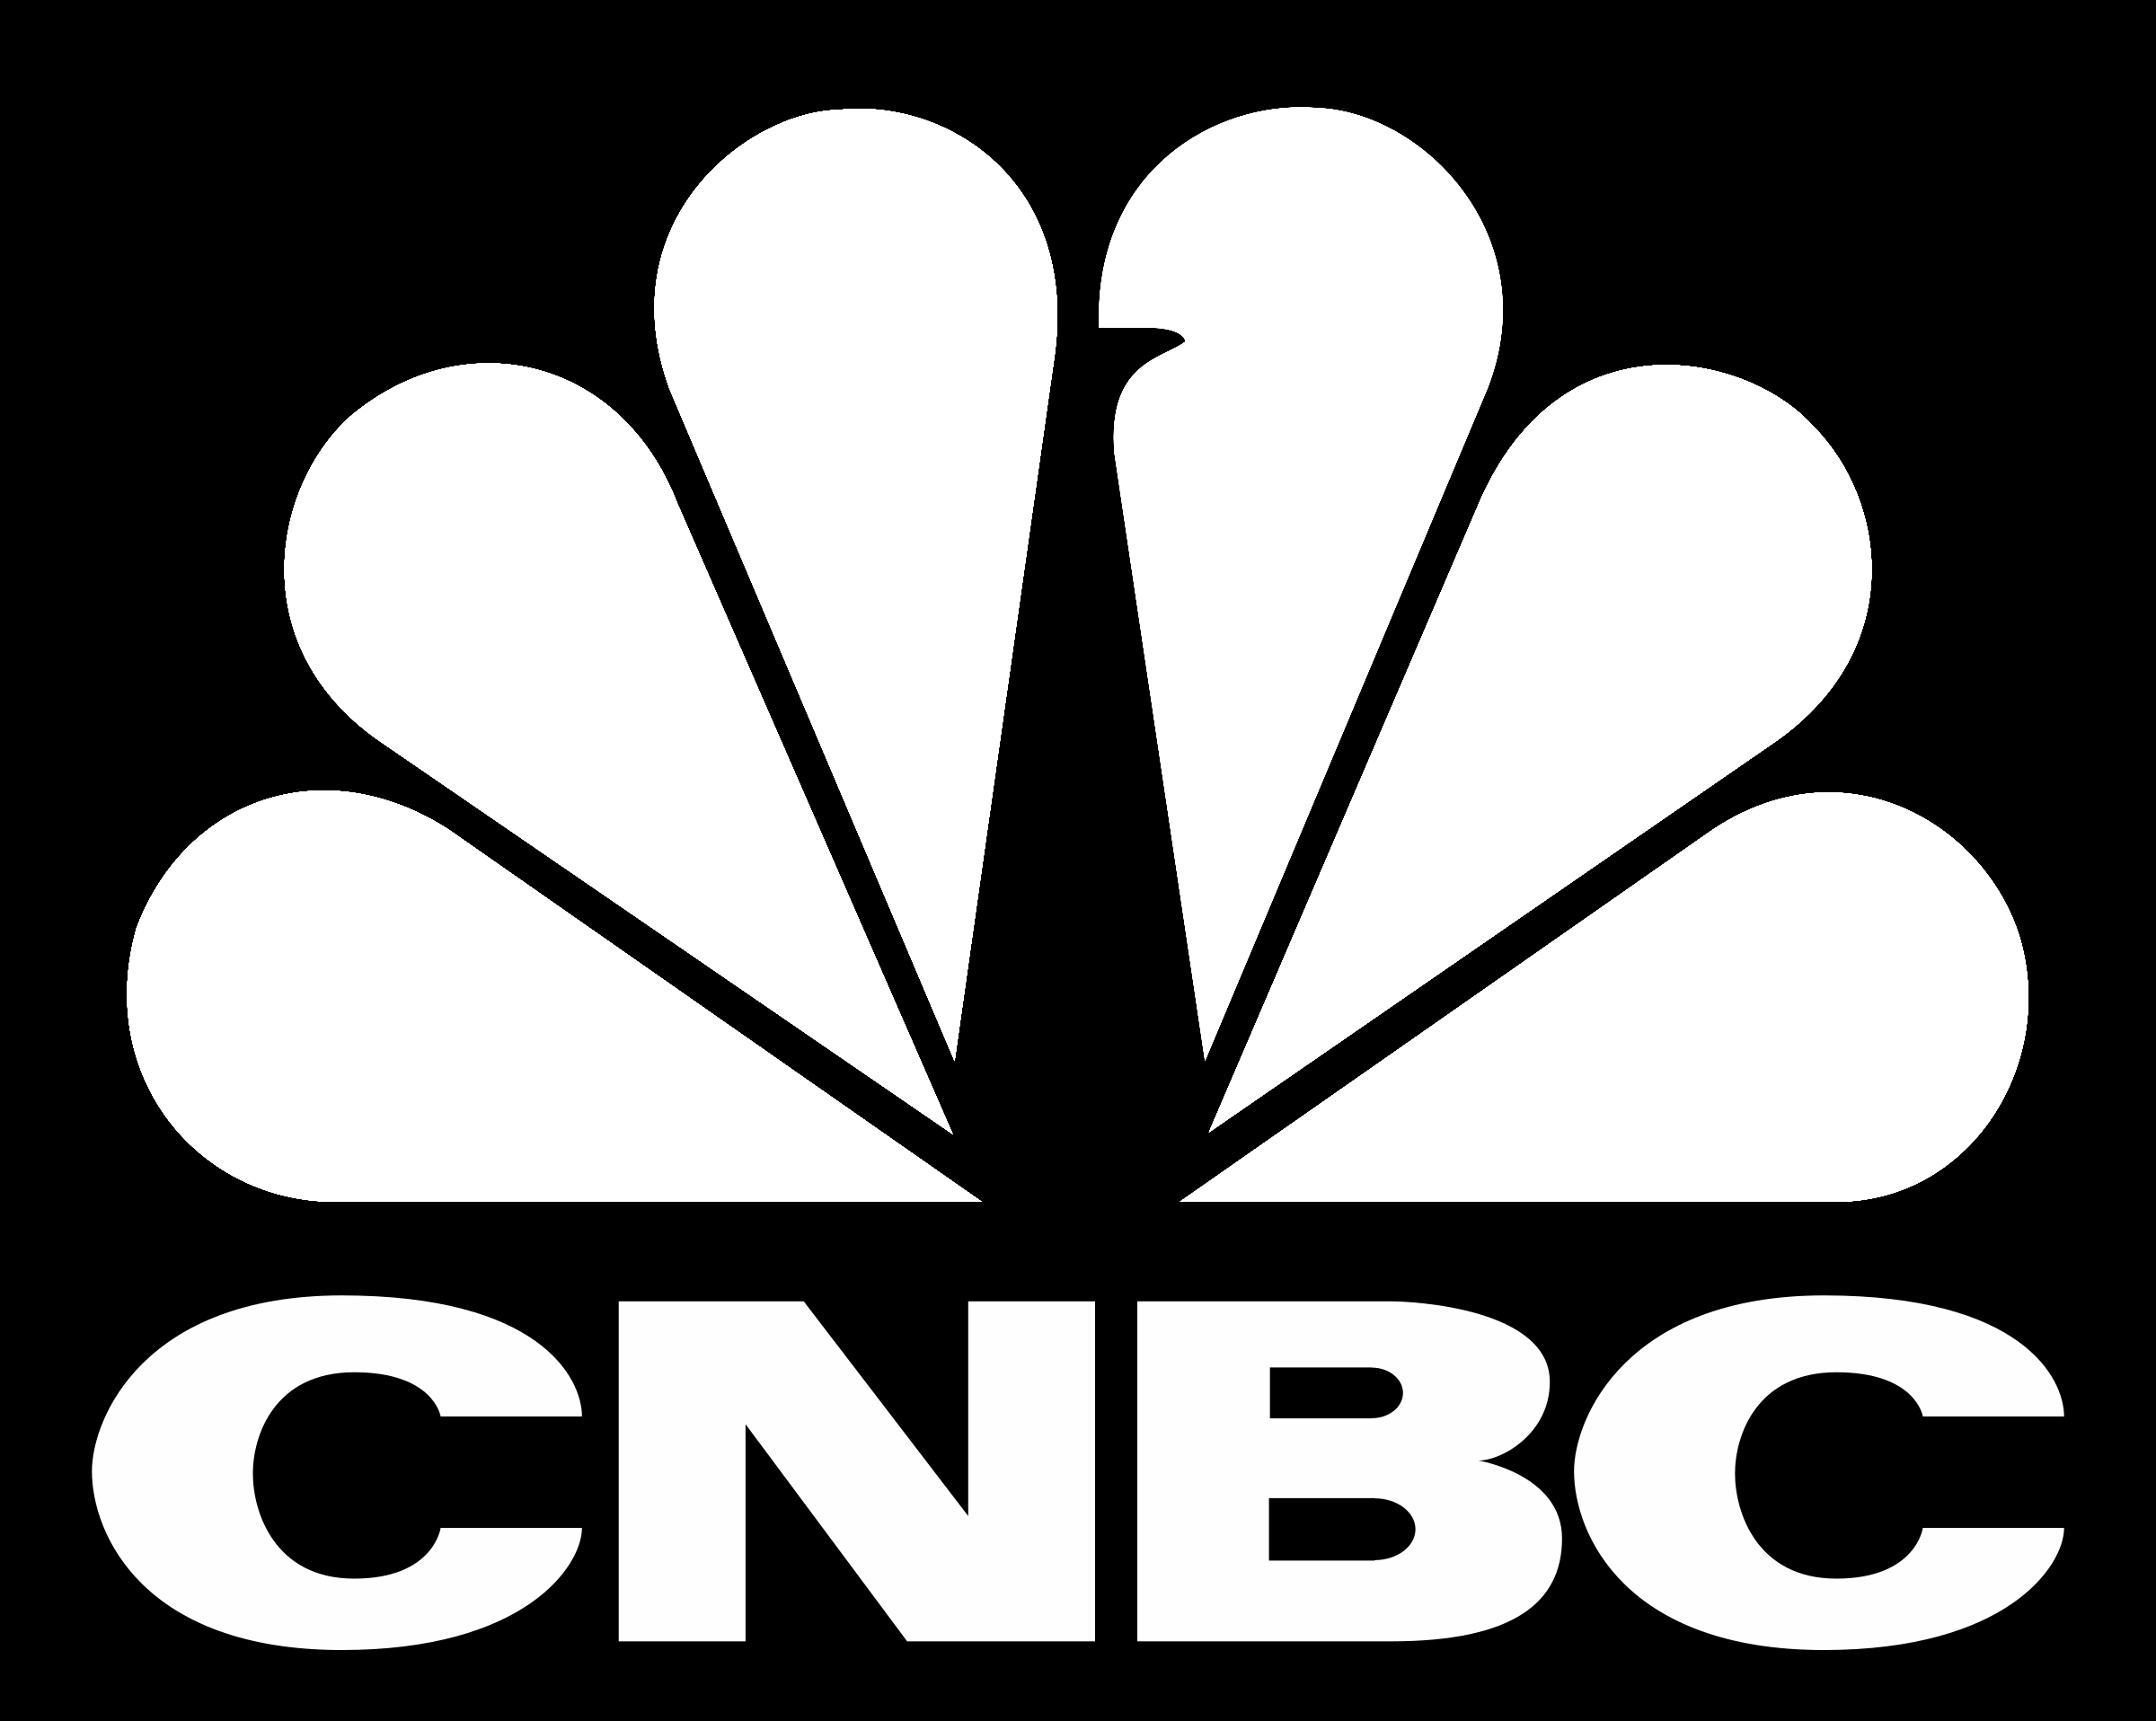 CNBC Logo - CNBC Logo PNG Transparent & SVG Vector - Freebie Supply